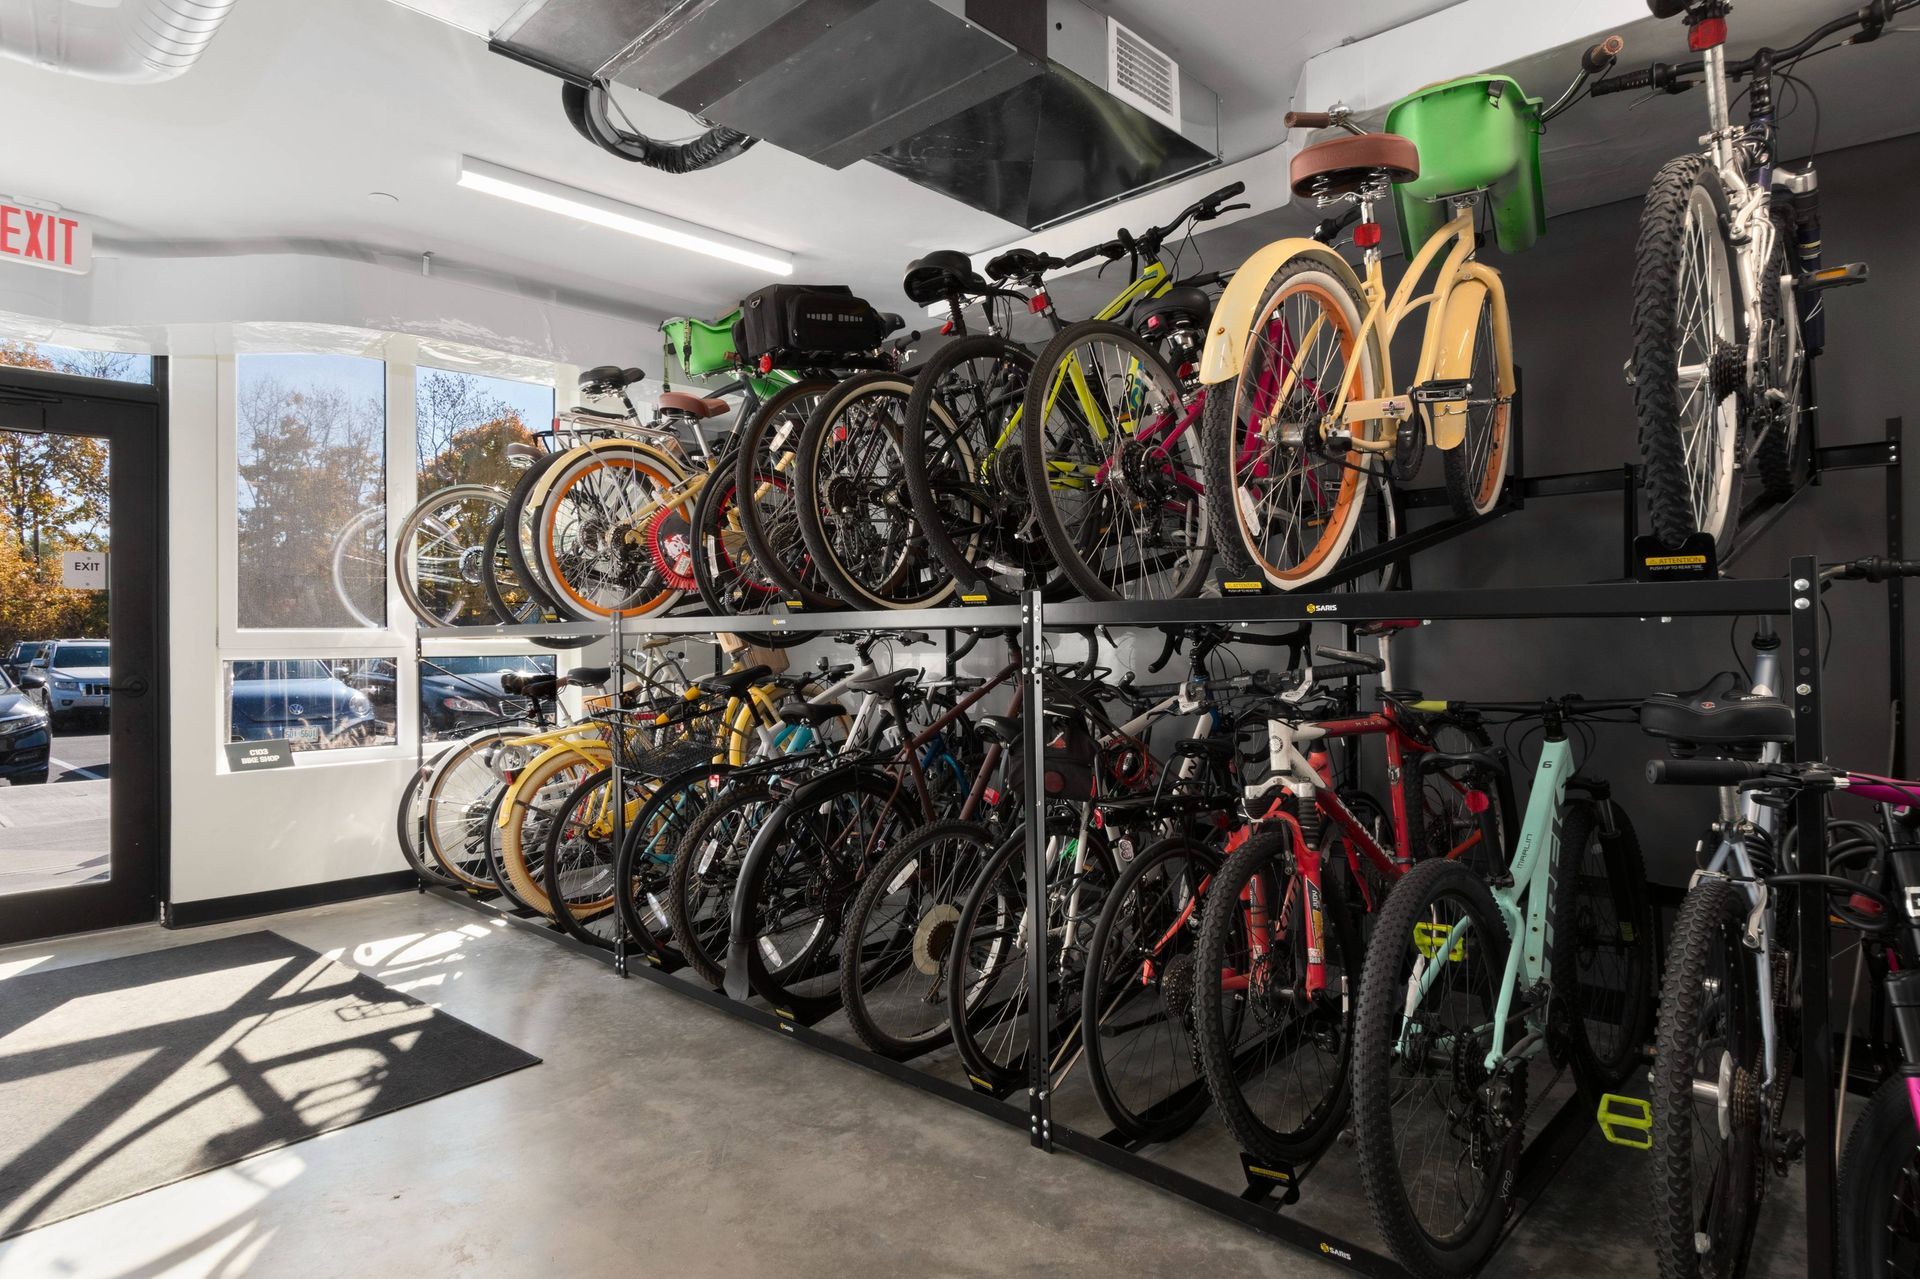 West End Yards apartment community with bike storage. 